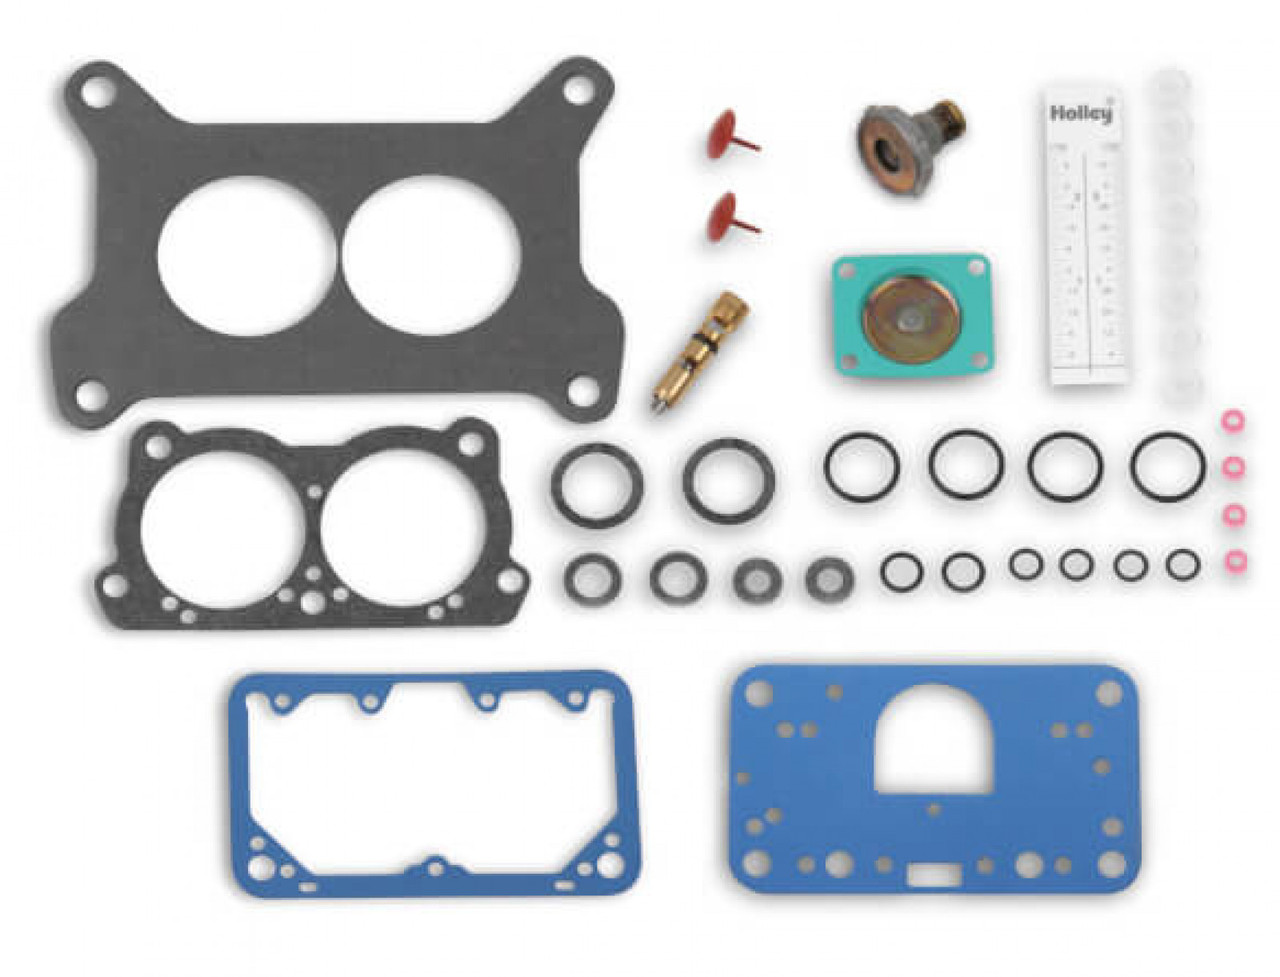 Holley Fast Kit Carburetor Rebuild Kit for 2300 Ultra XP Carburetors (HOL-137-1550)